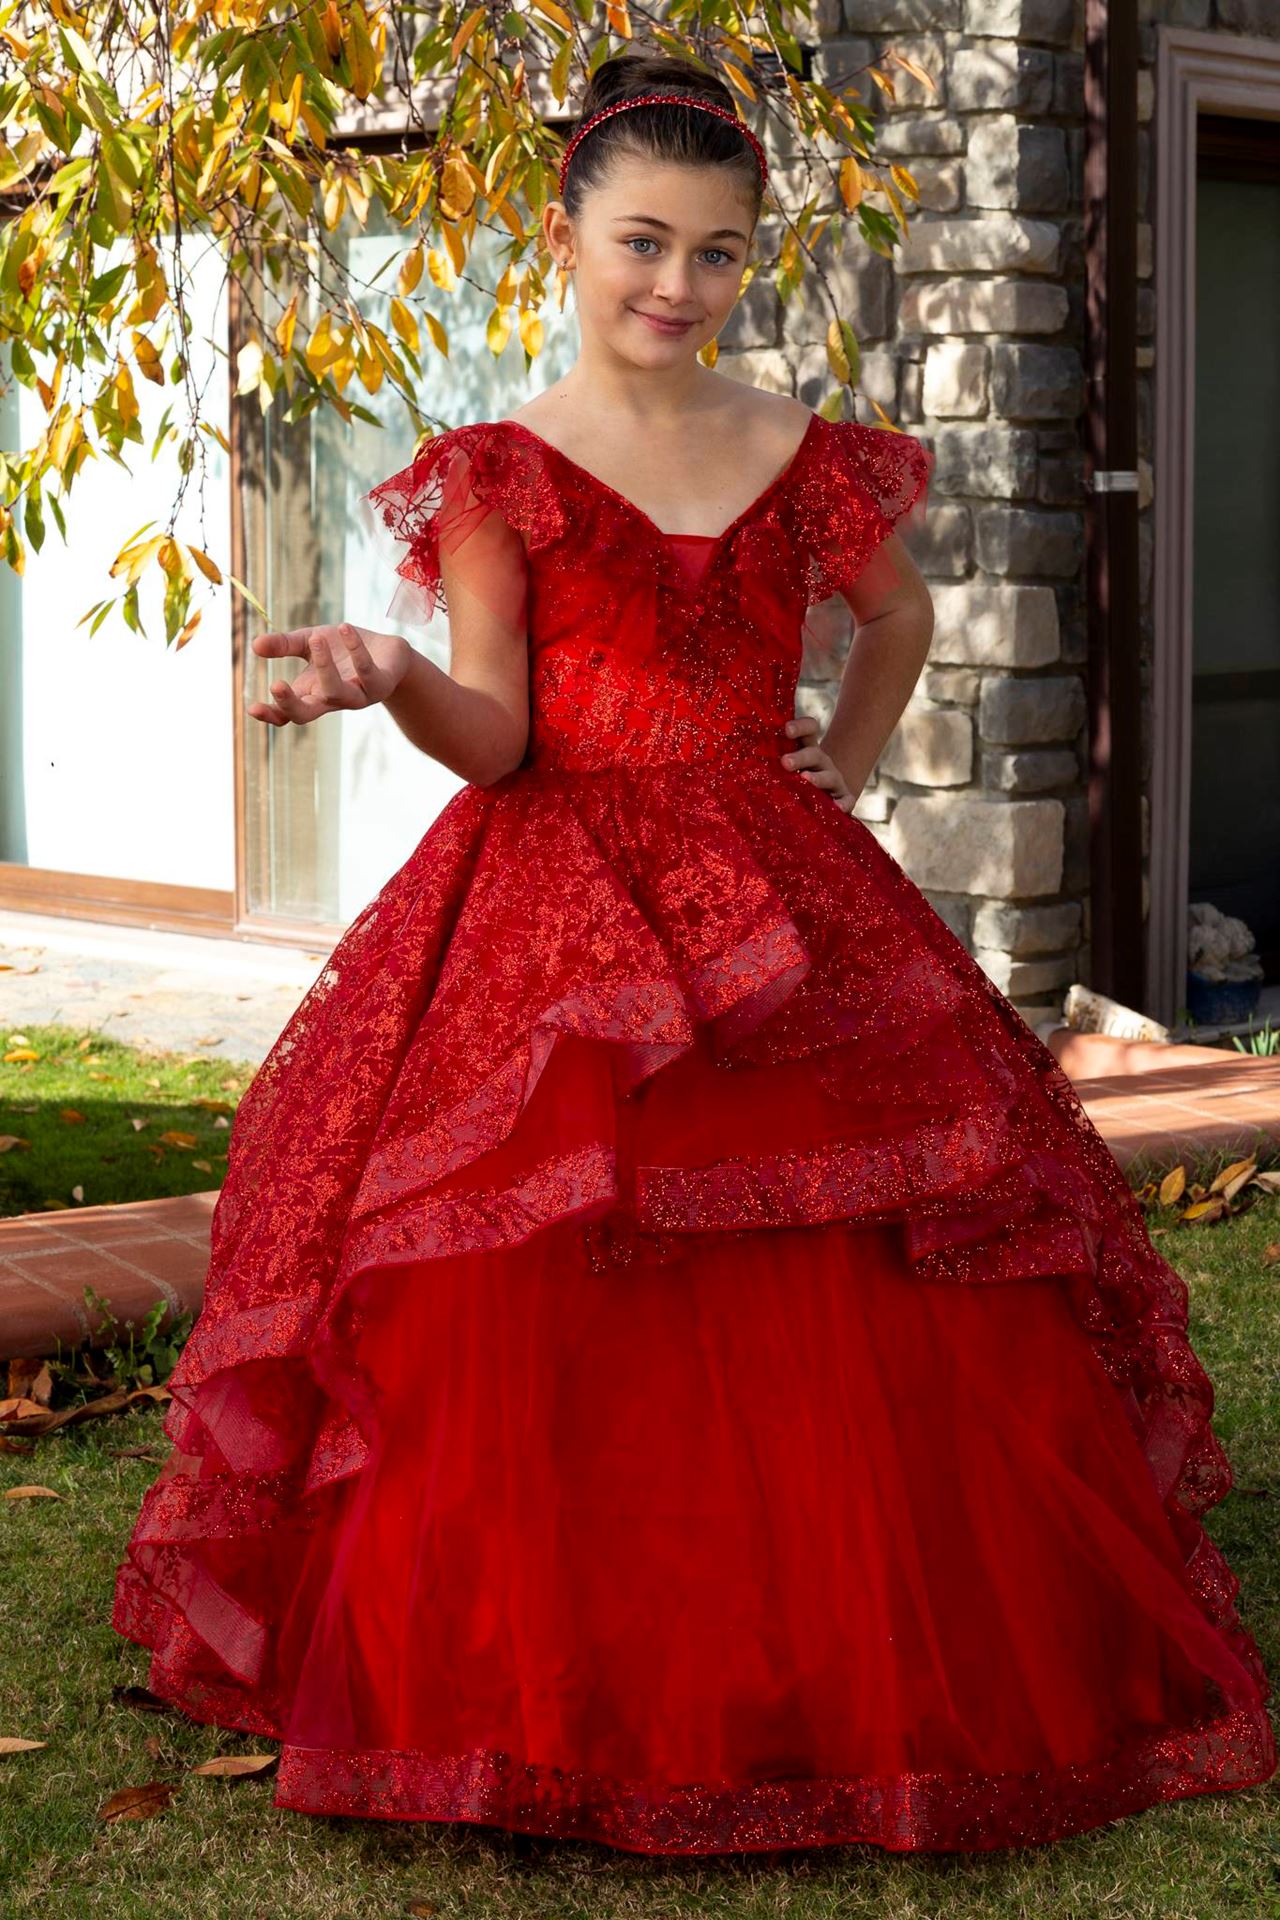 Serene 2-6 Years Old Girl Dress 20083 Red